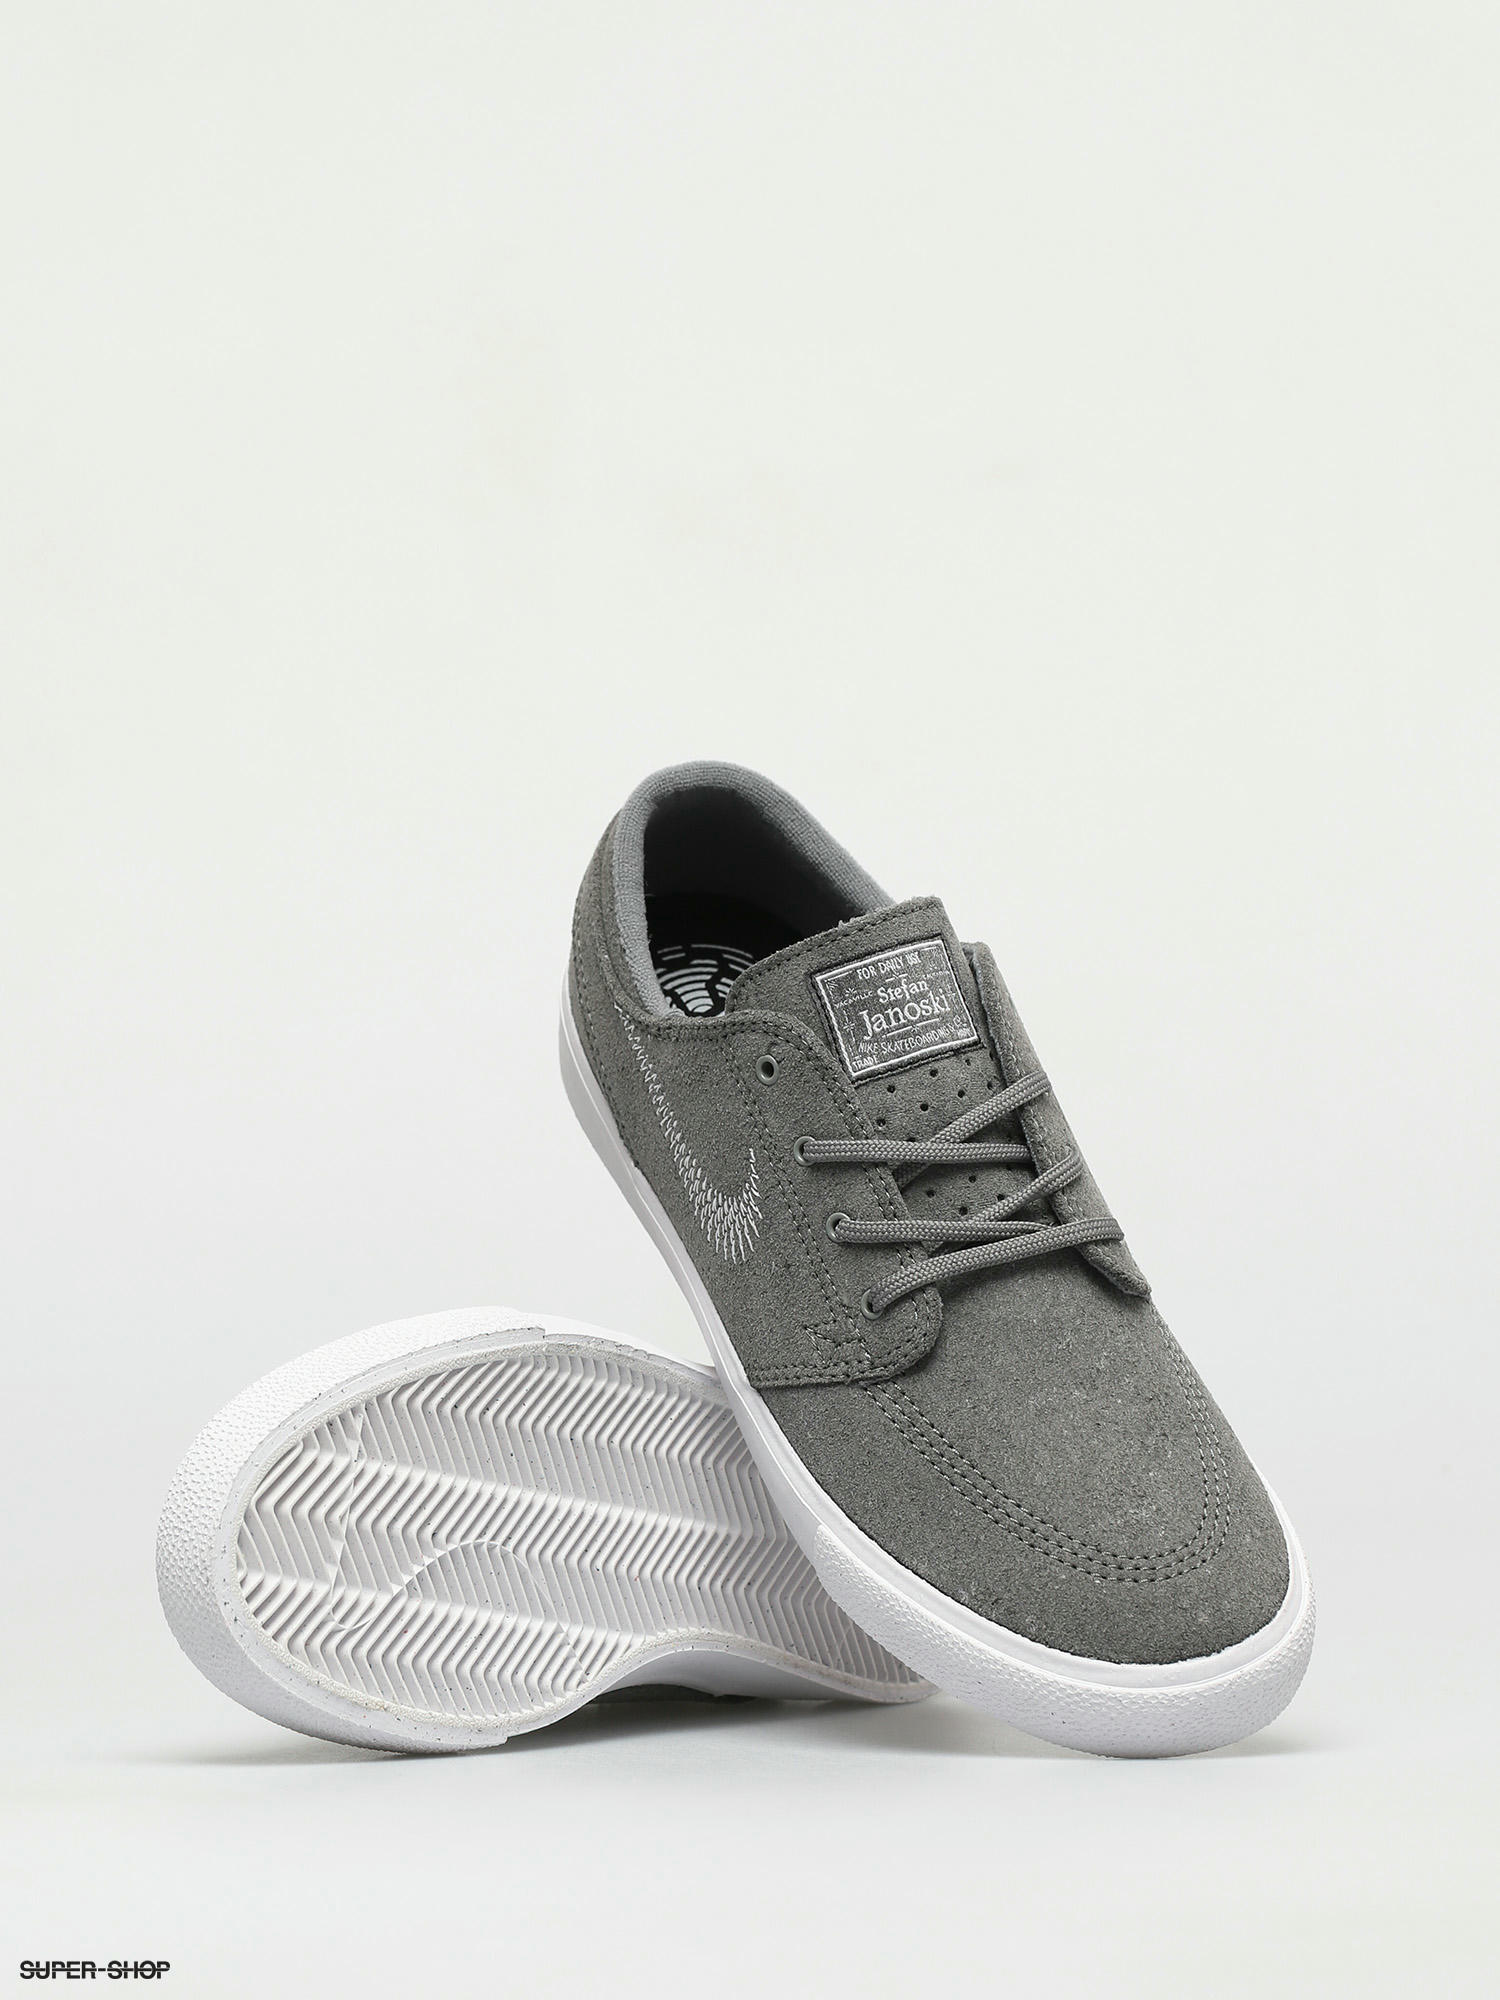 Nike Sb Zoom Stefan Janoski Fl Rm Shoes Tumbled Grey White Tumbled Grey White